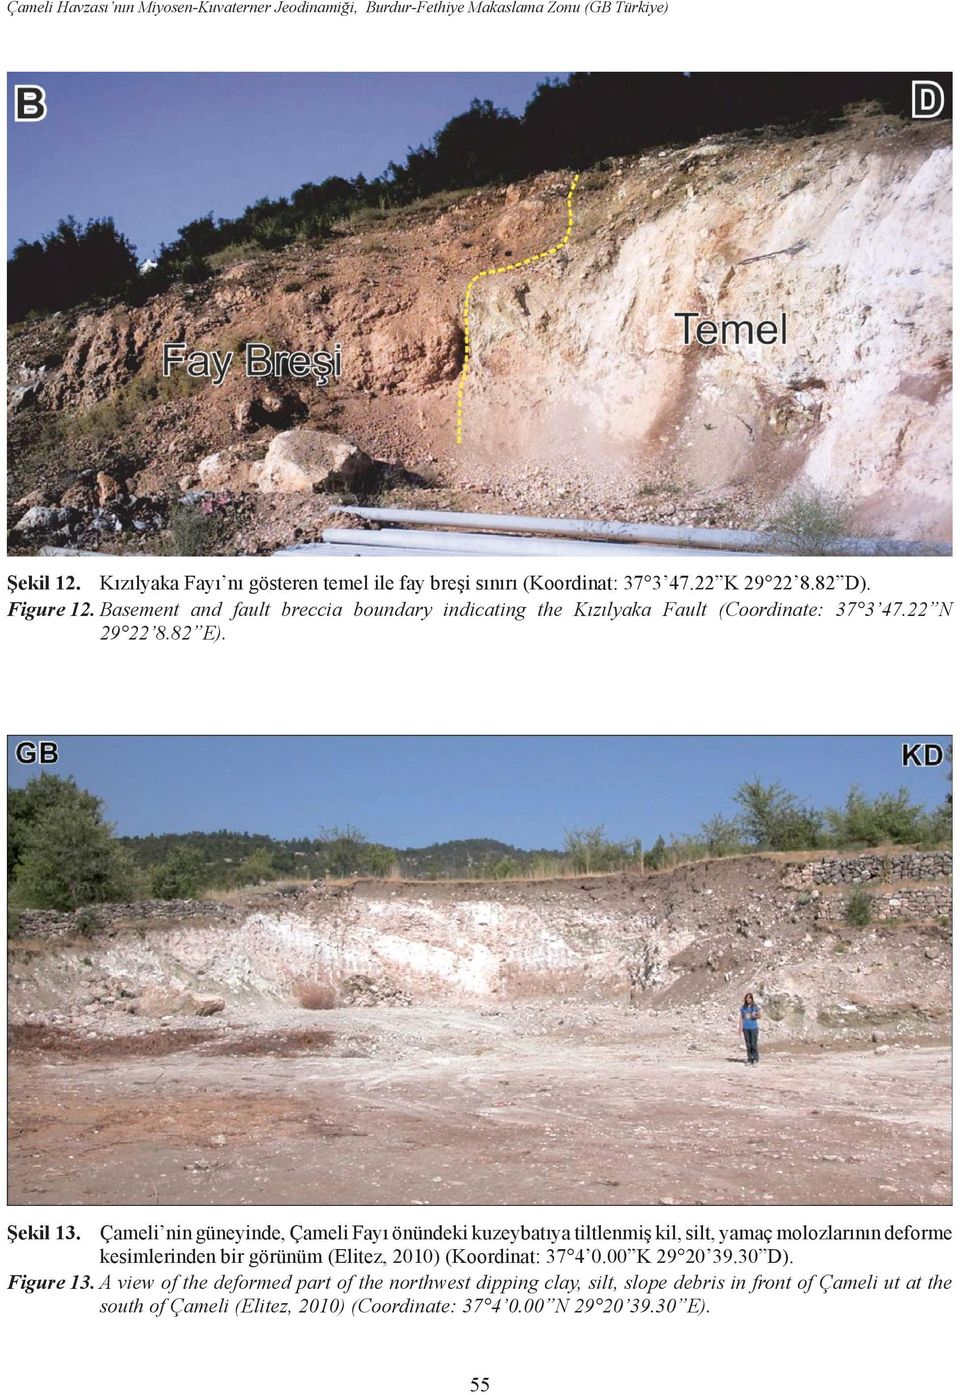 Basement and fault breccia boundary indicating the Kızılyaka Fault (Coordinate: 37 3 47.22 N 29 22 8.82 E). Şekil 13.